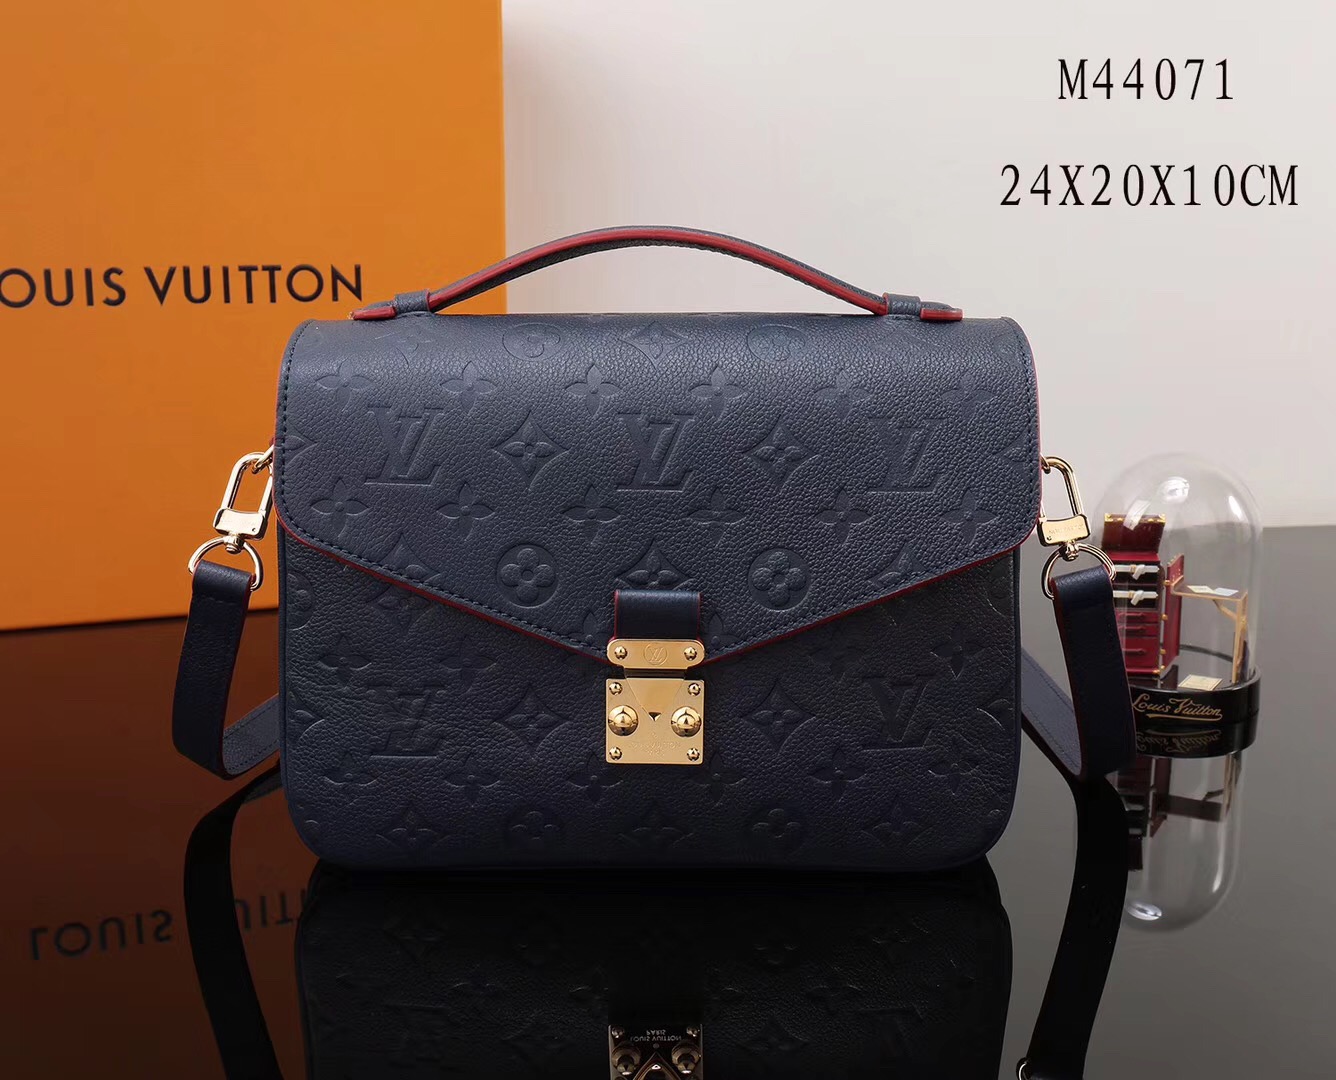 LV Louis Vuitton Pochette Metis bags M44071 Leather Handbags Black&red